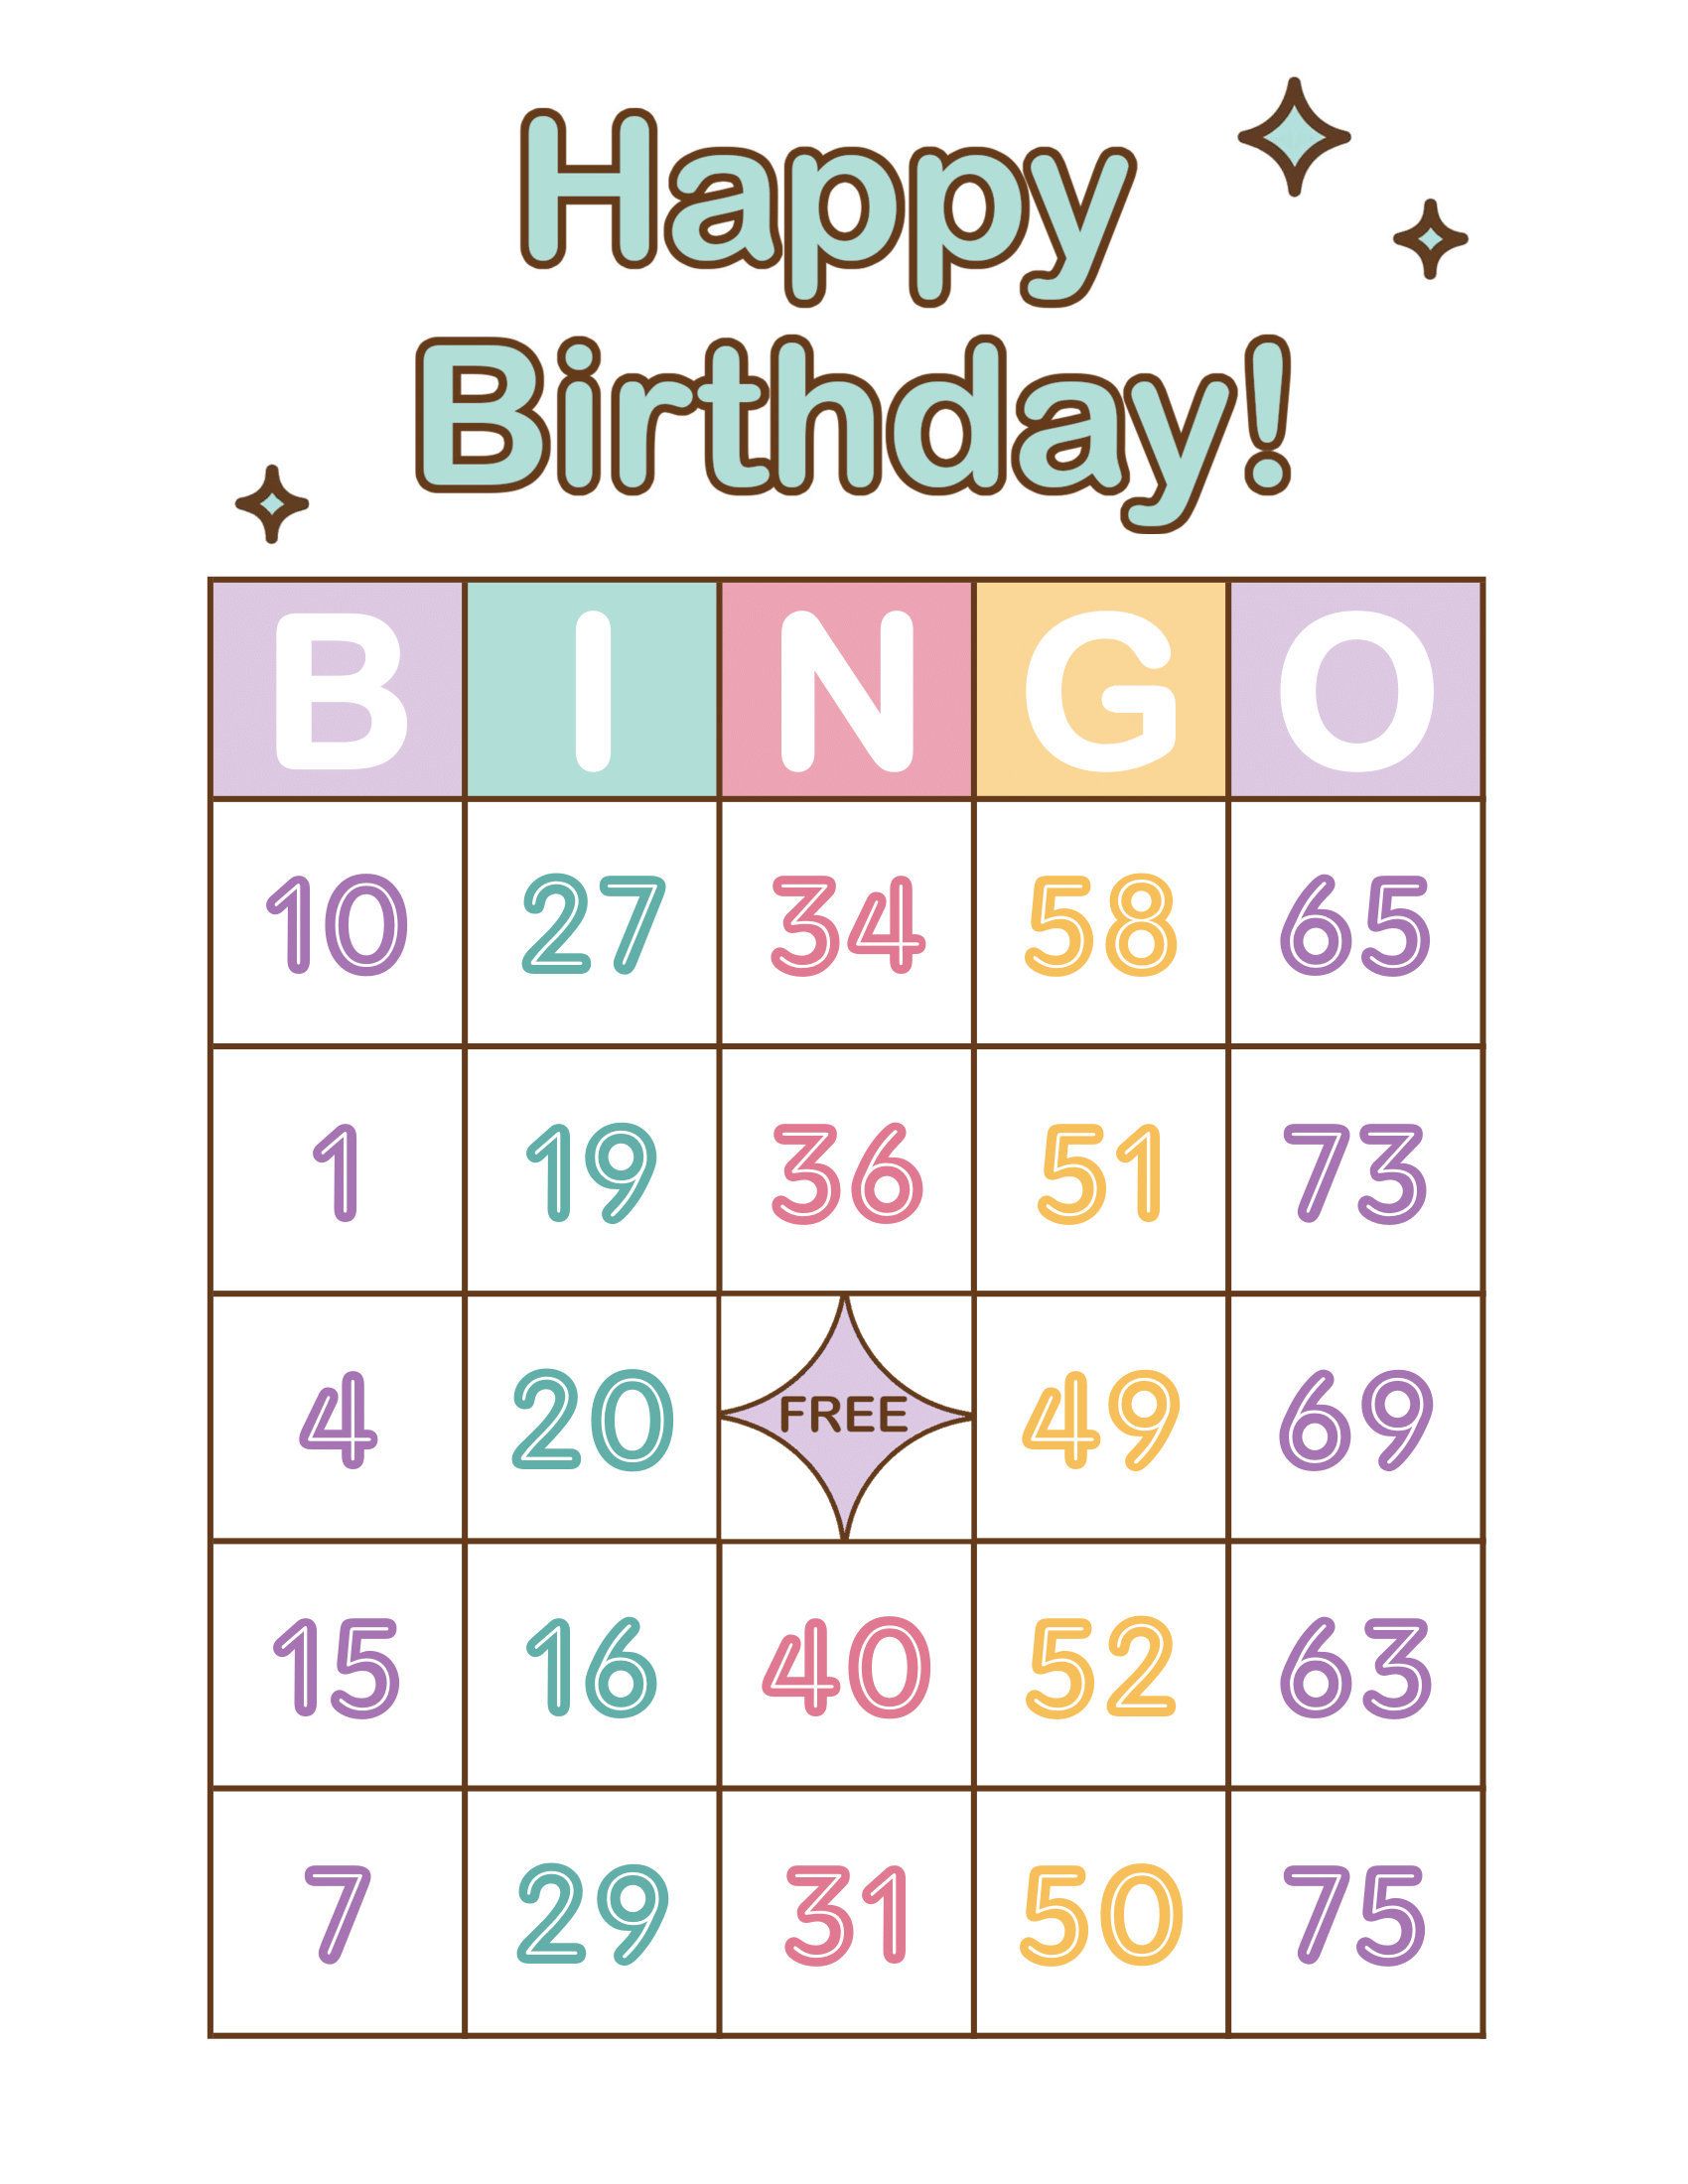 Birthday Bingo Cards 200 cards prints 1 per page immediate